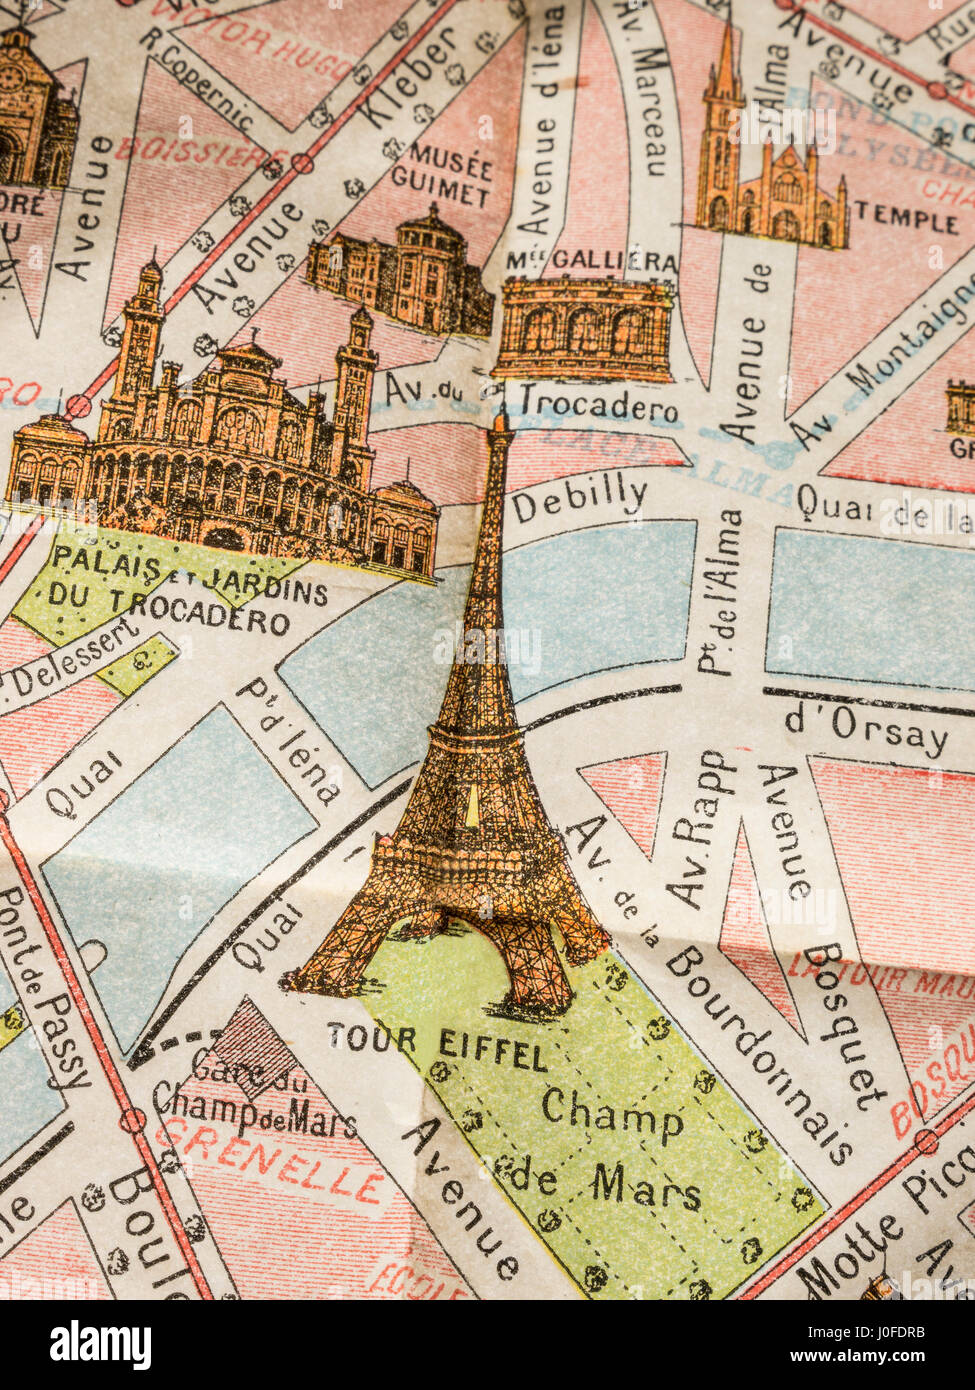 PARIS VINTAGE RARE MAP DETAIL Fine print detail of rare 1900's vintage retro colour Monumental Map of Paris, featuring Eiffel Tower and Trocadero etc Stock Photo